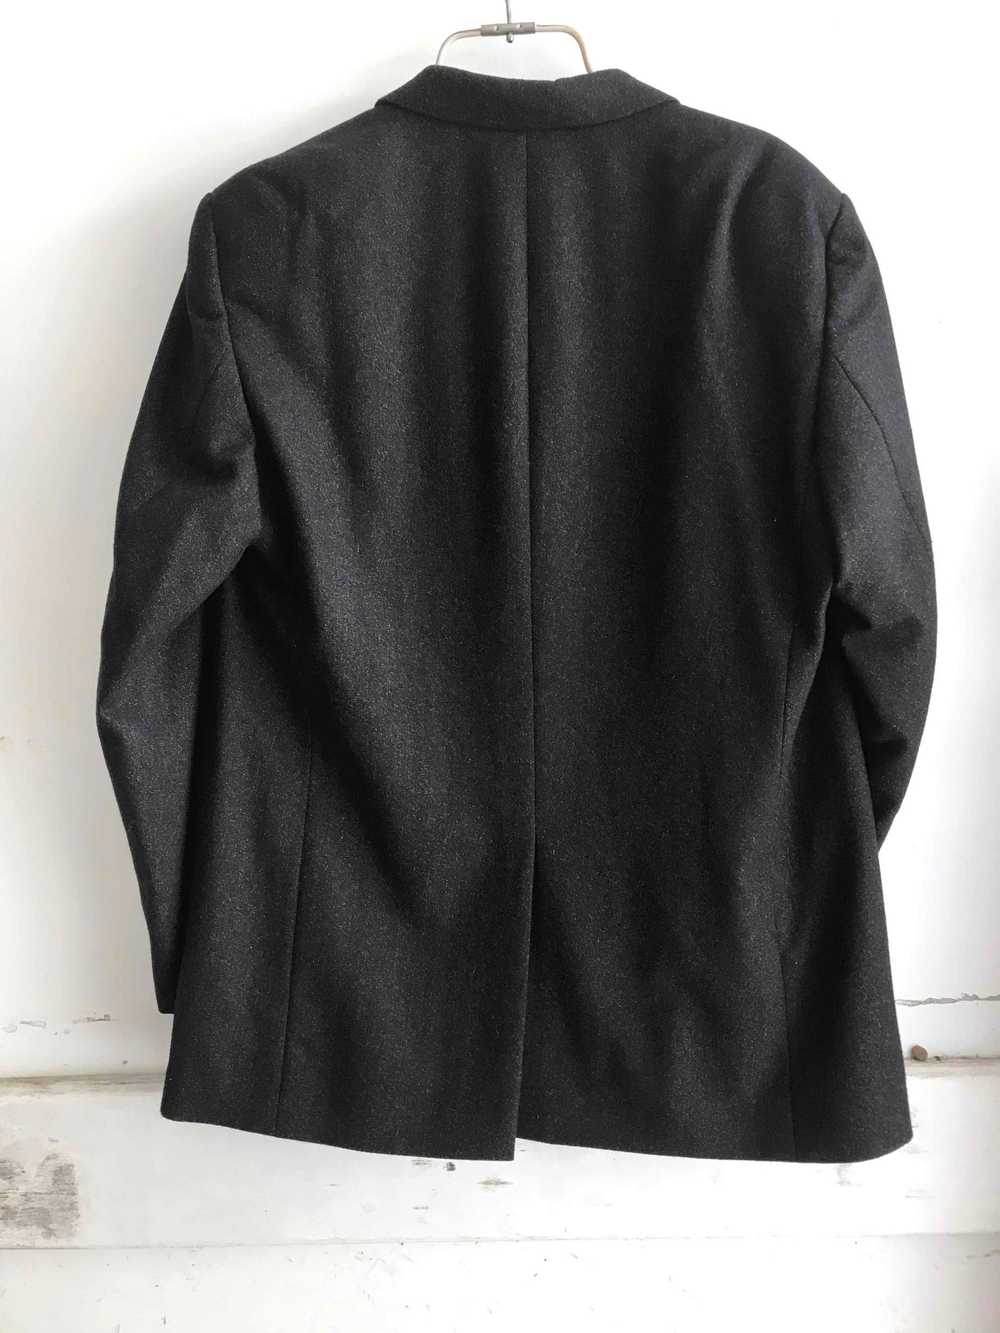 Blazer and laine - Blazer 100% wool, black marl - image 2